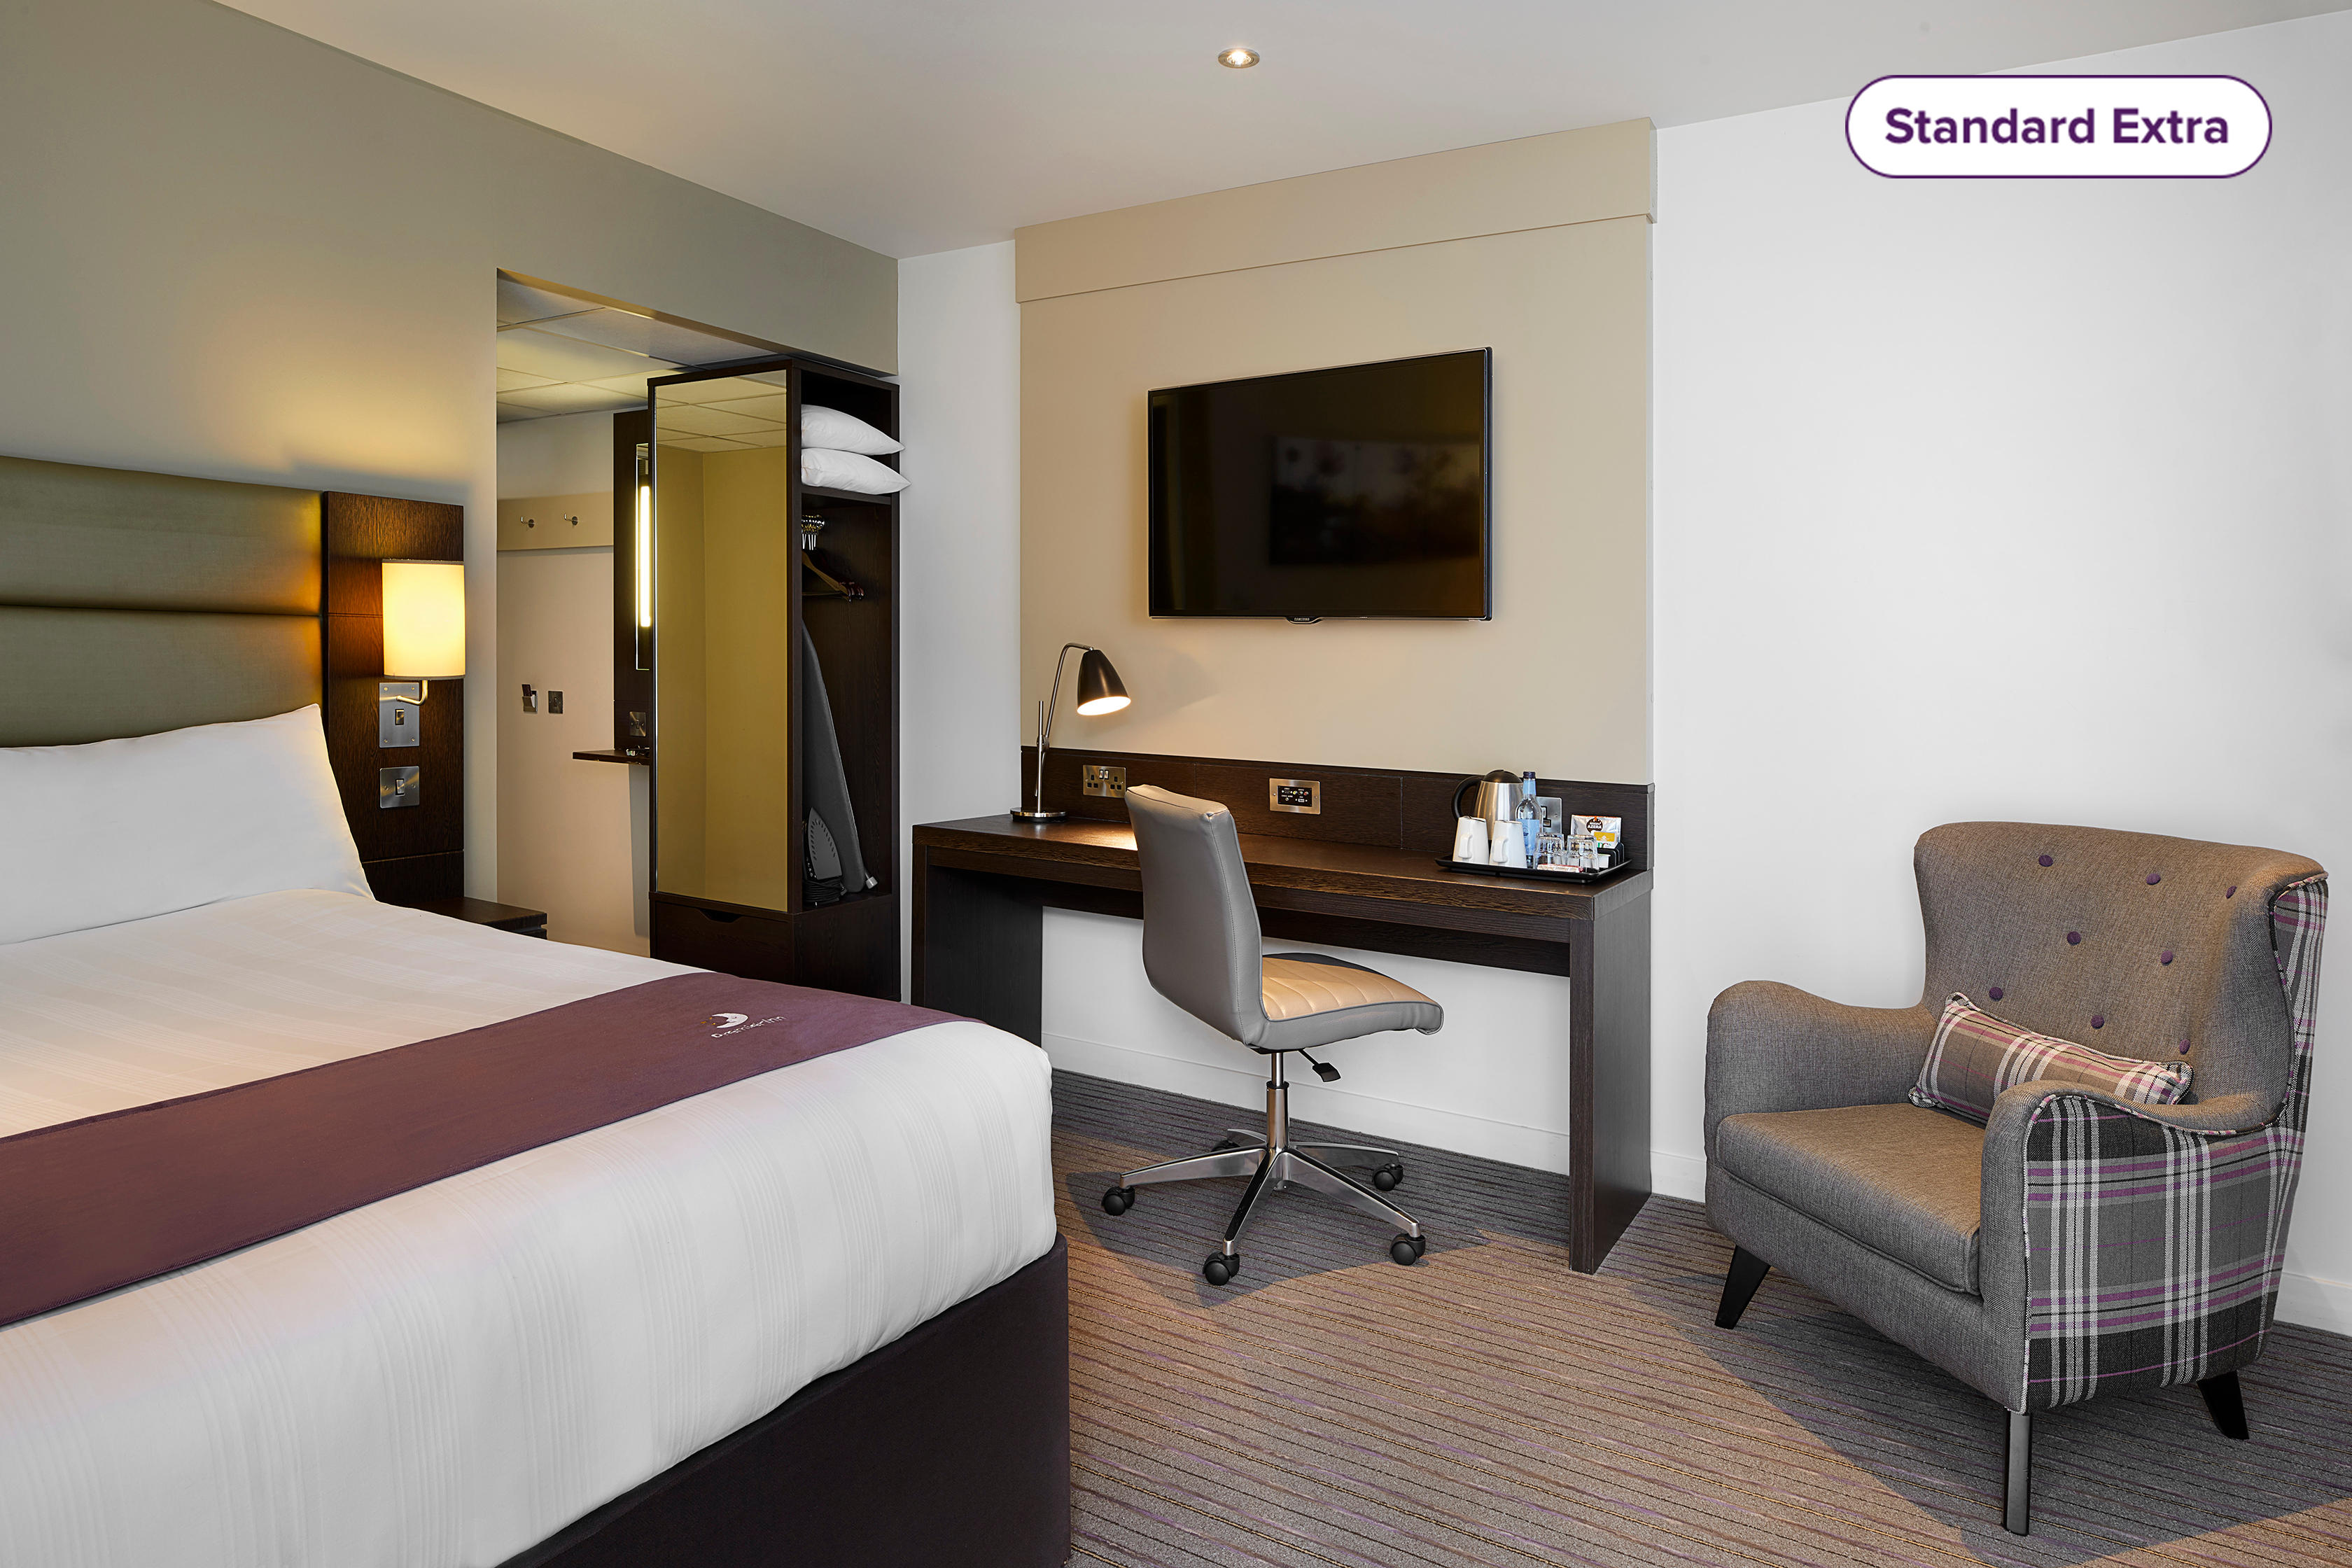 Standard Extra Bedroom Premier Inn St Albans City Centre hotel St Albans 03333 219331